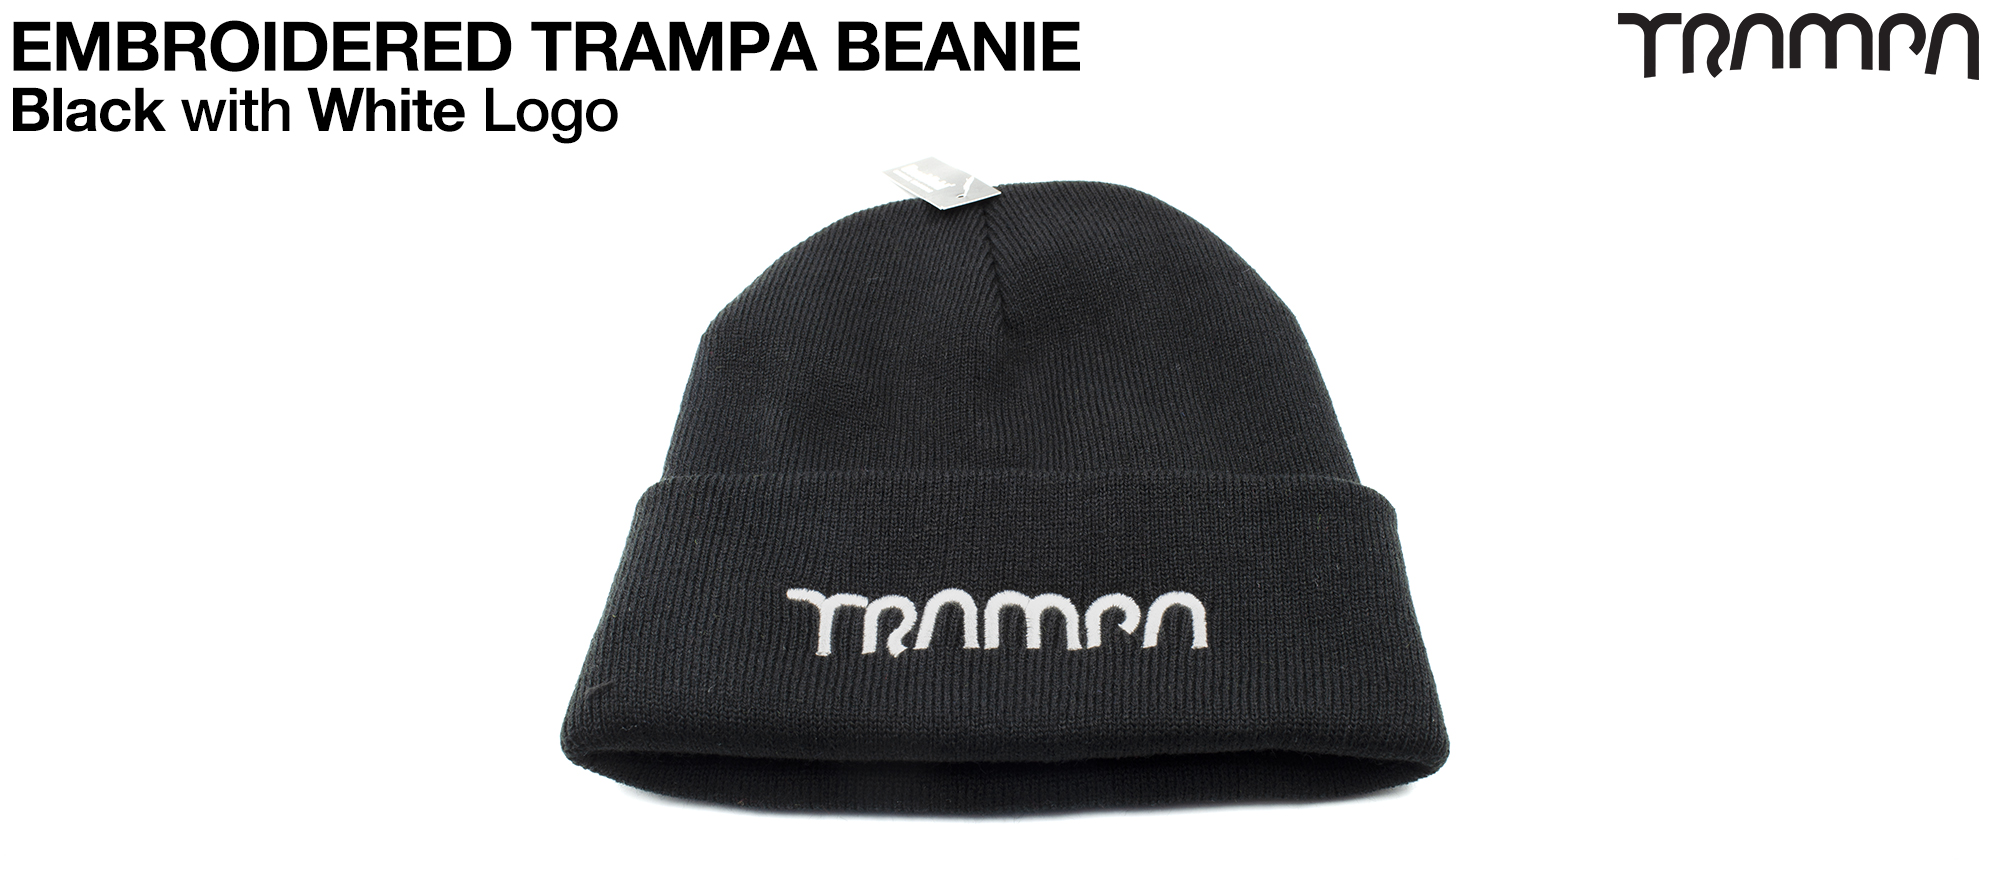 BLACK Beanie with WHITE TRAMPA Logo 